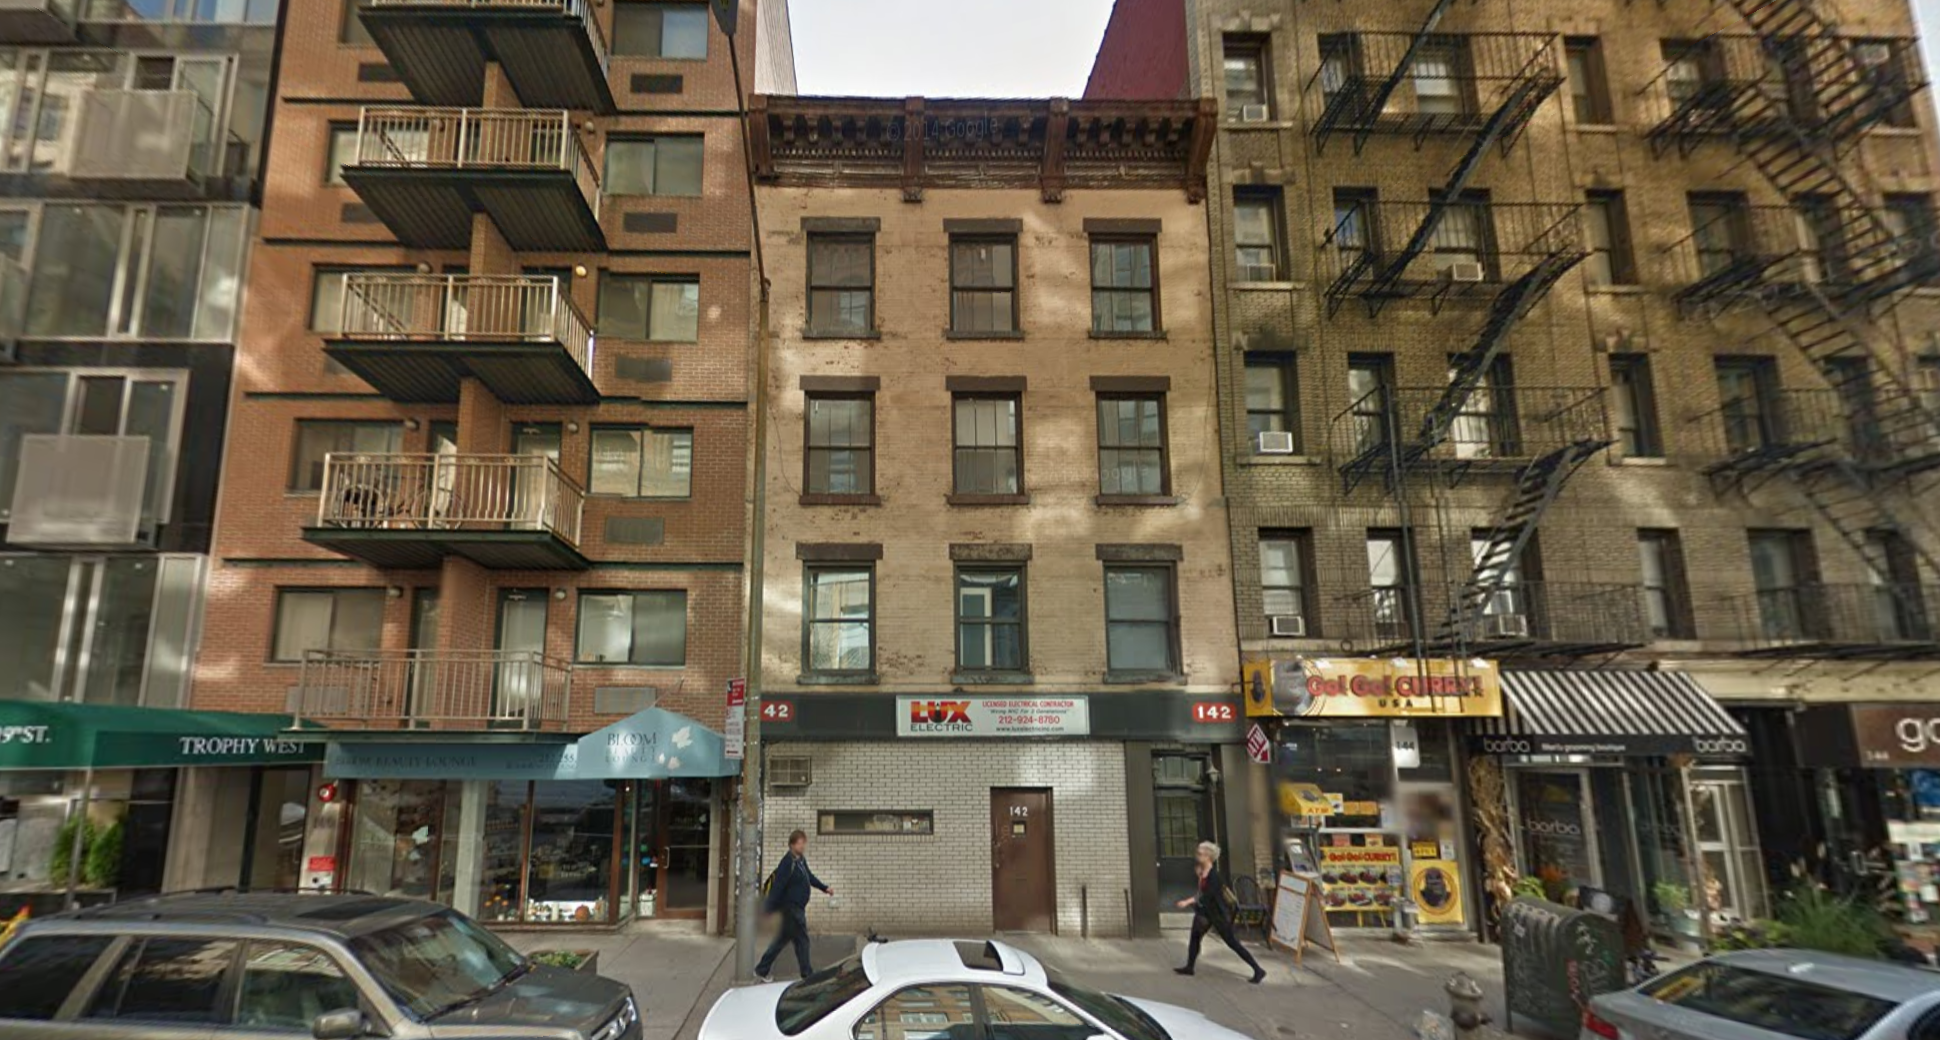 142 West 19th Street, image via Google Maps